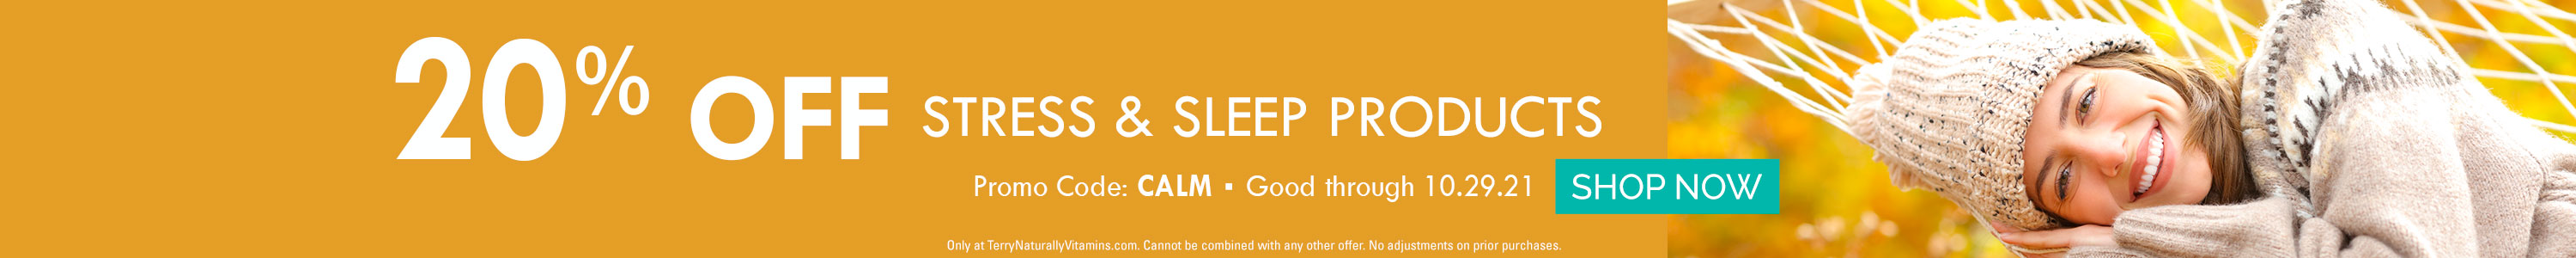 Stress/Sleep Promo